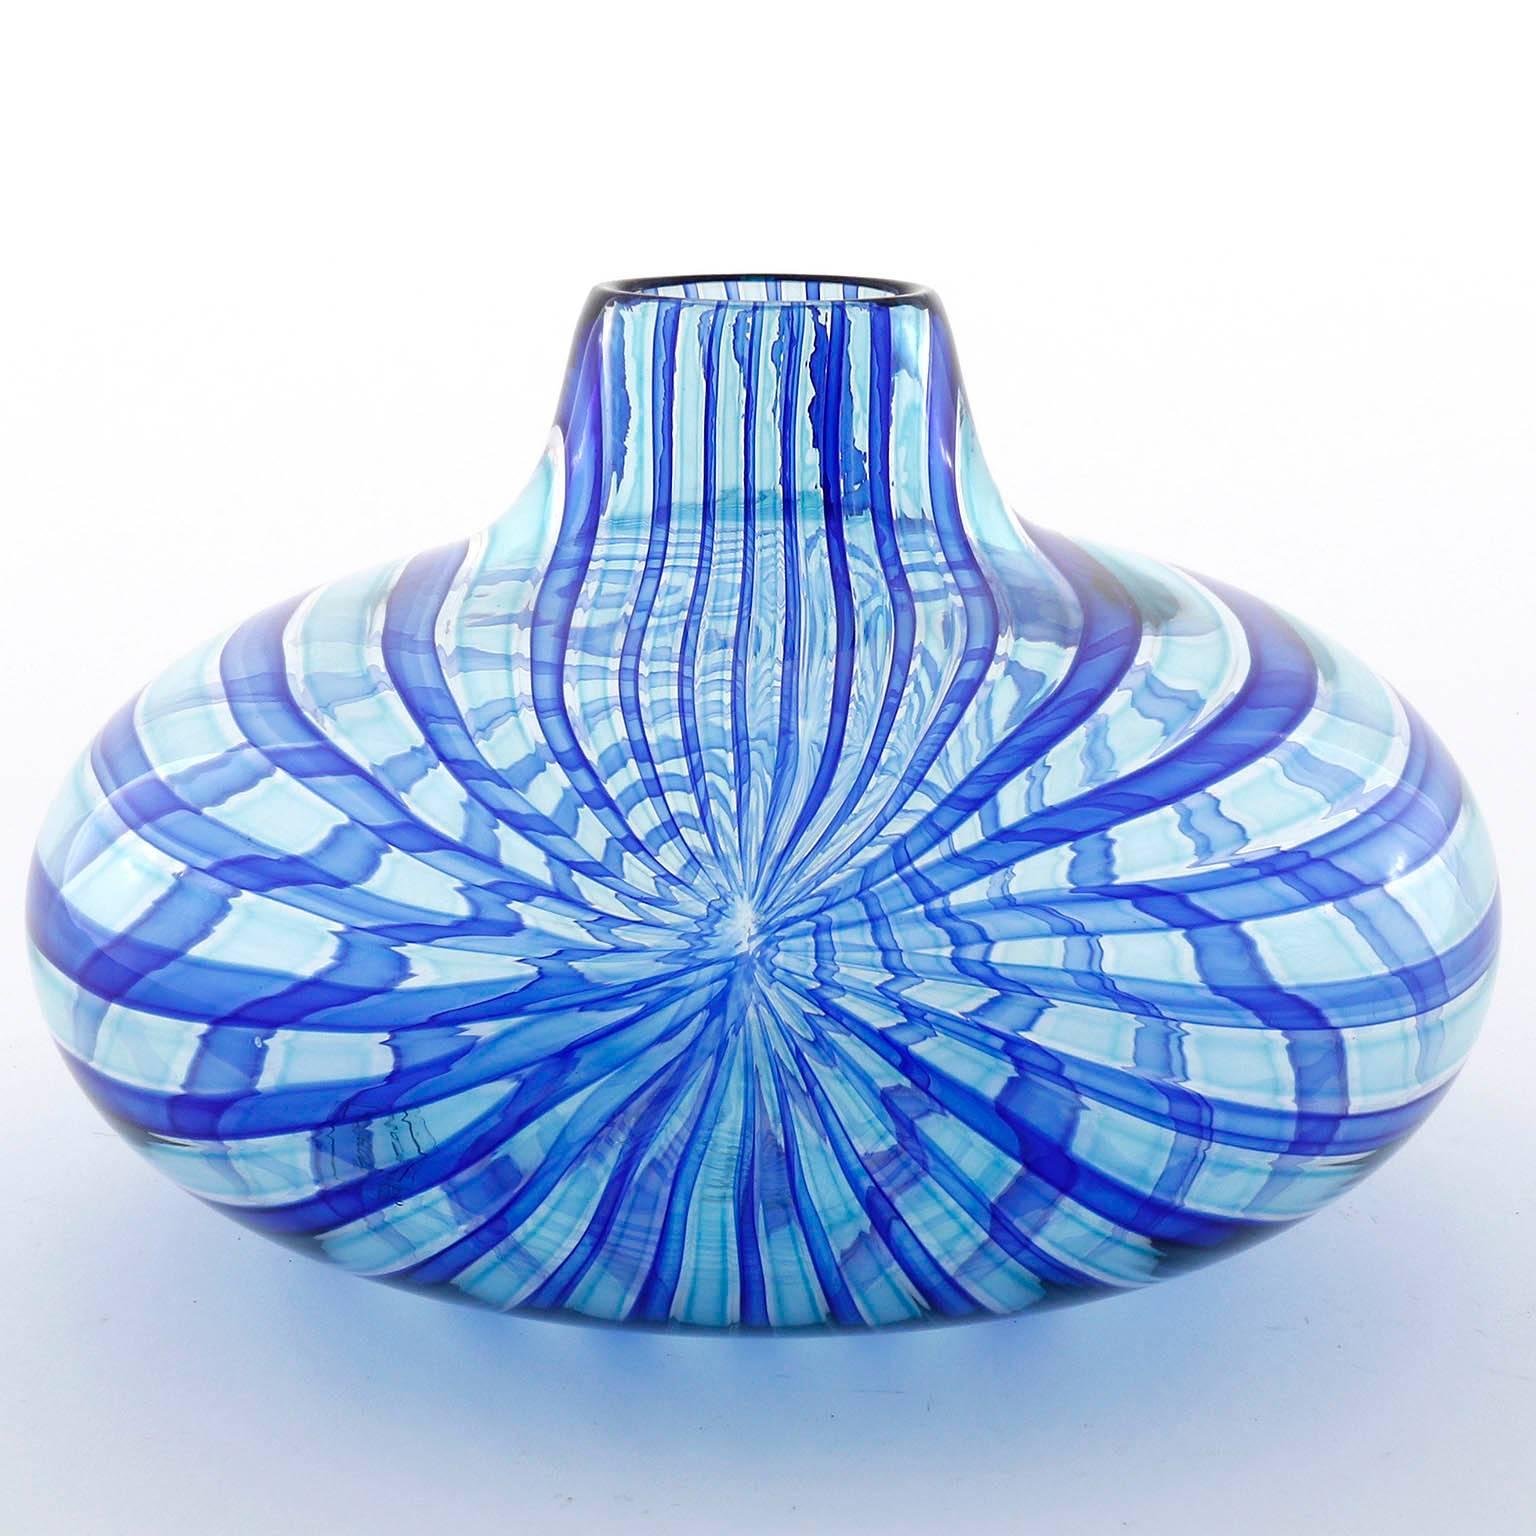 Modern Blue Glass Vase 'Samarcanda' Lino Tagliapietra Effetre International, Italy 1986